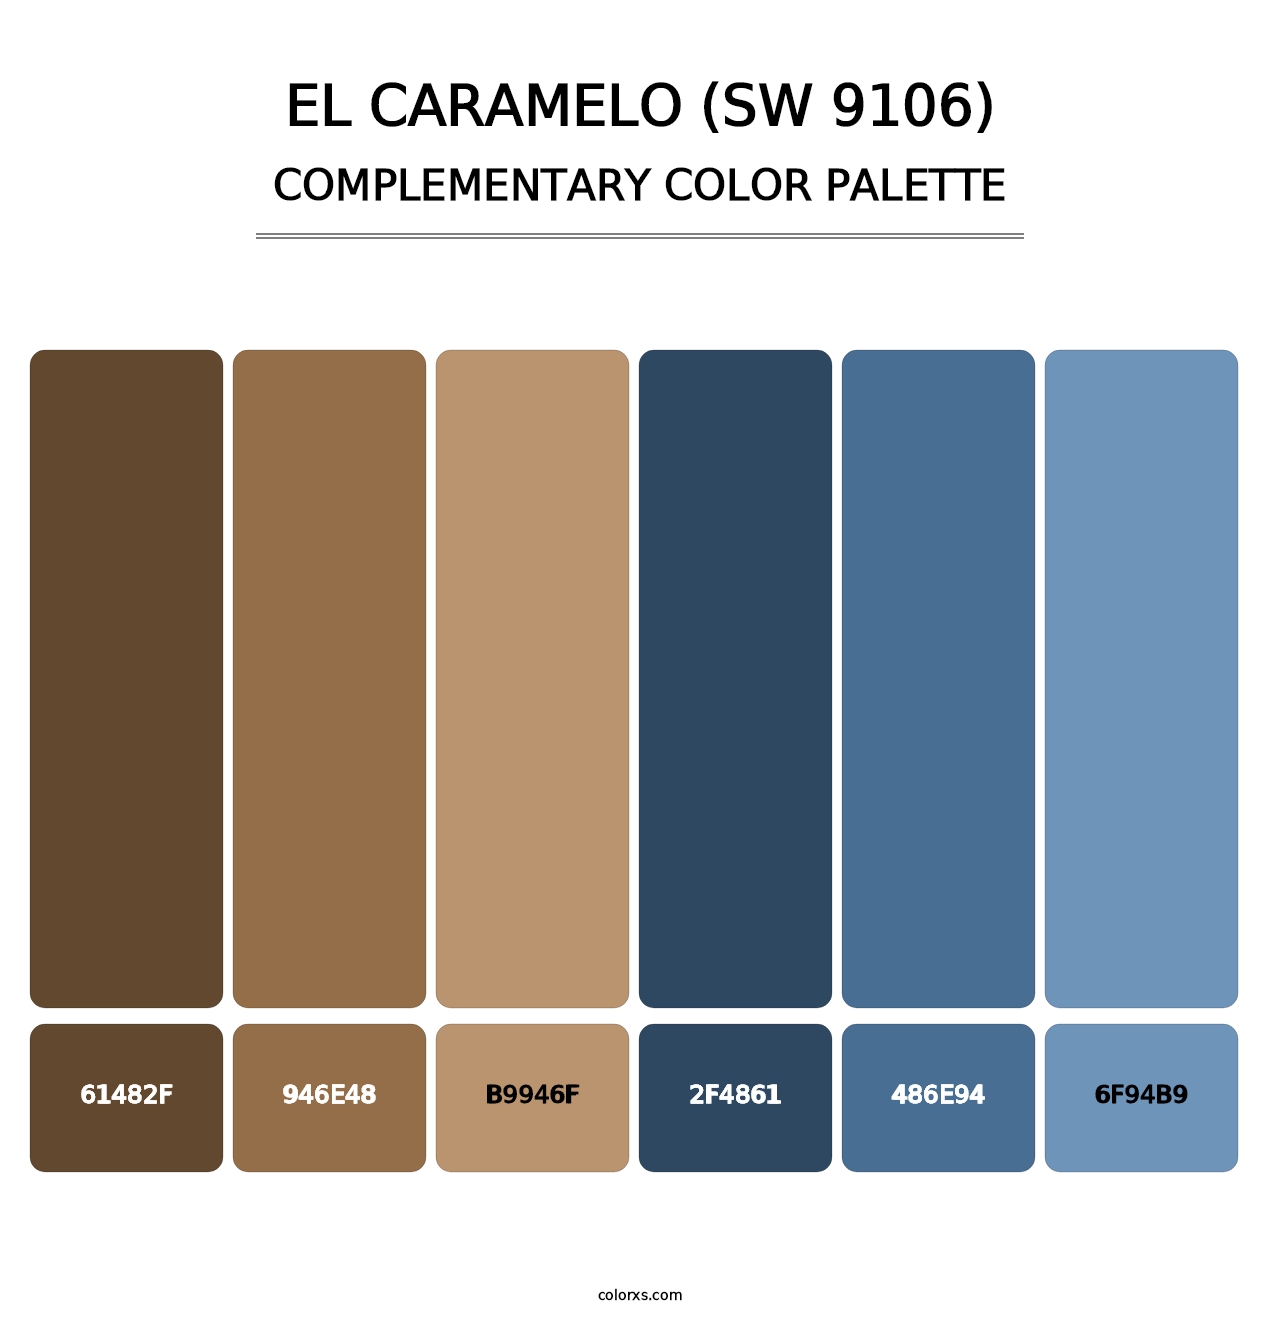 El Caramelo (SW 9106) - Complementary Color Palette